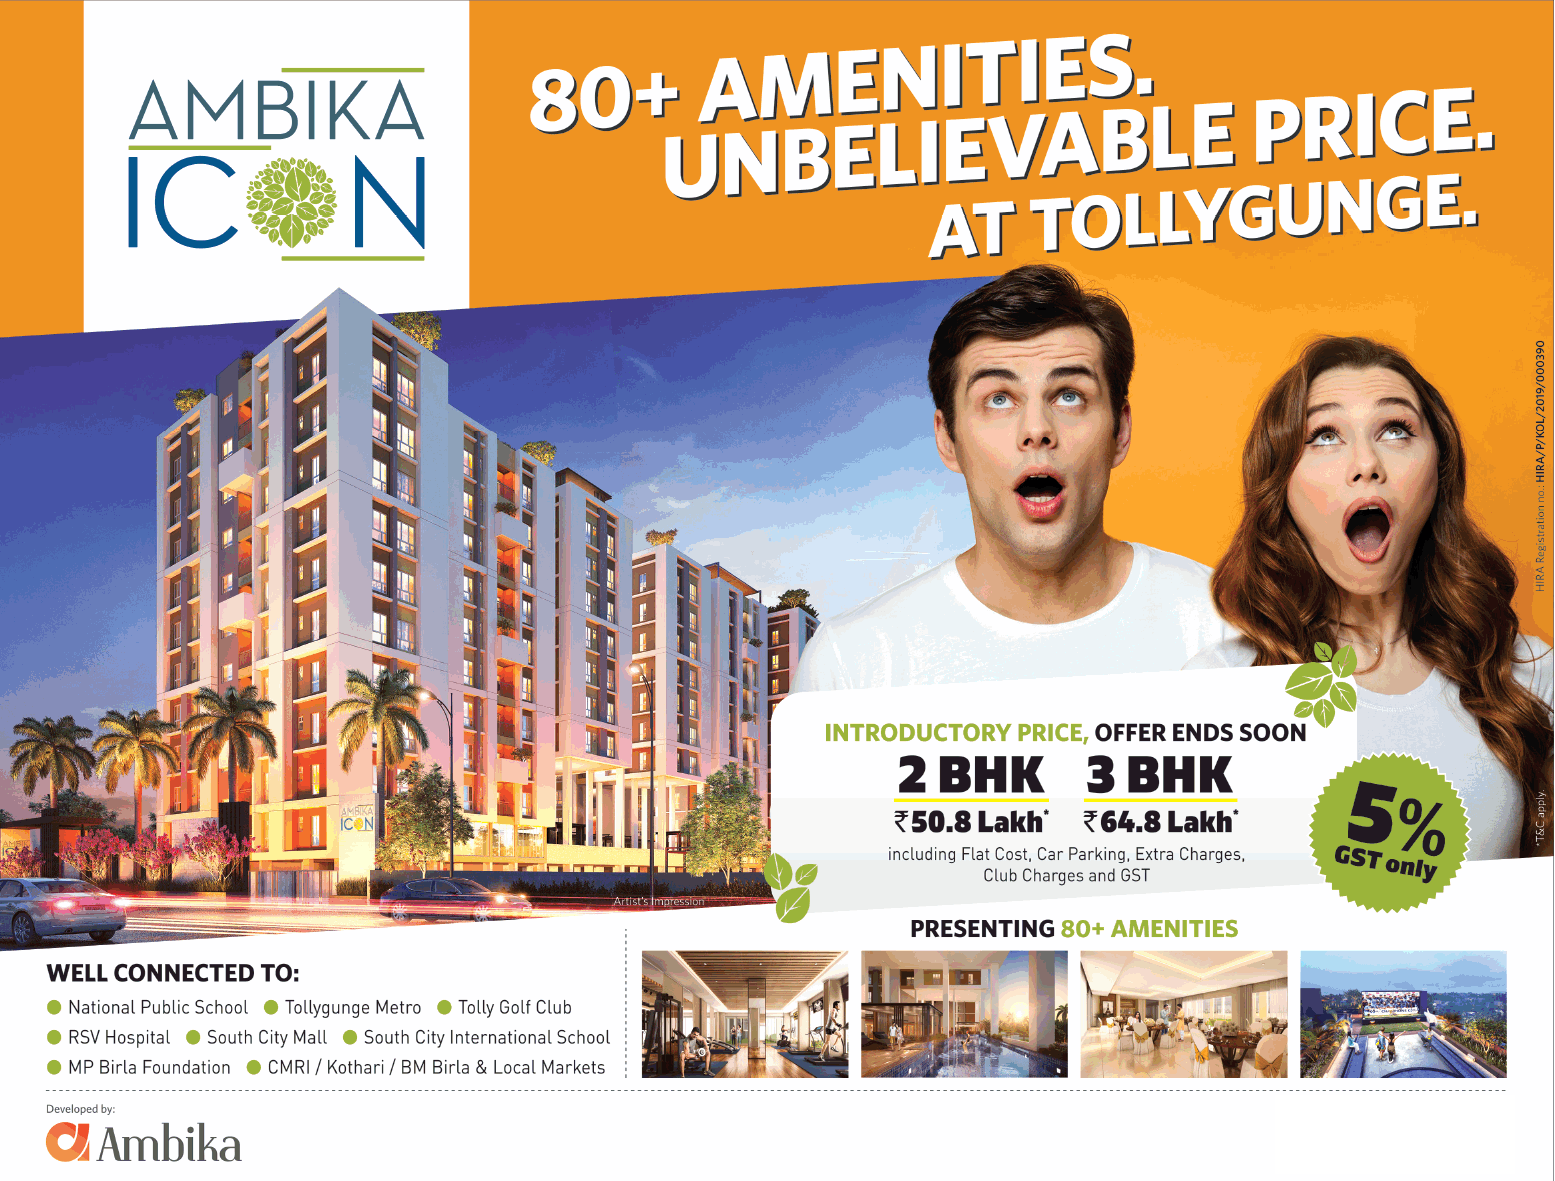 Presenting 80+ amenities at Ambika Icon in Kolkata Update